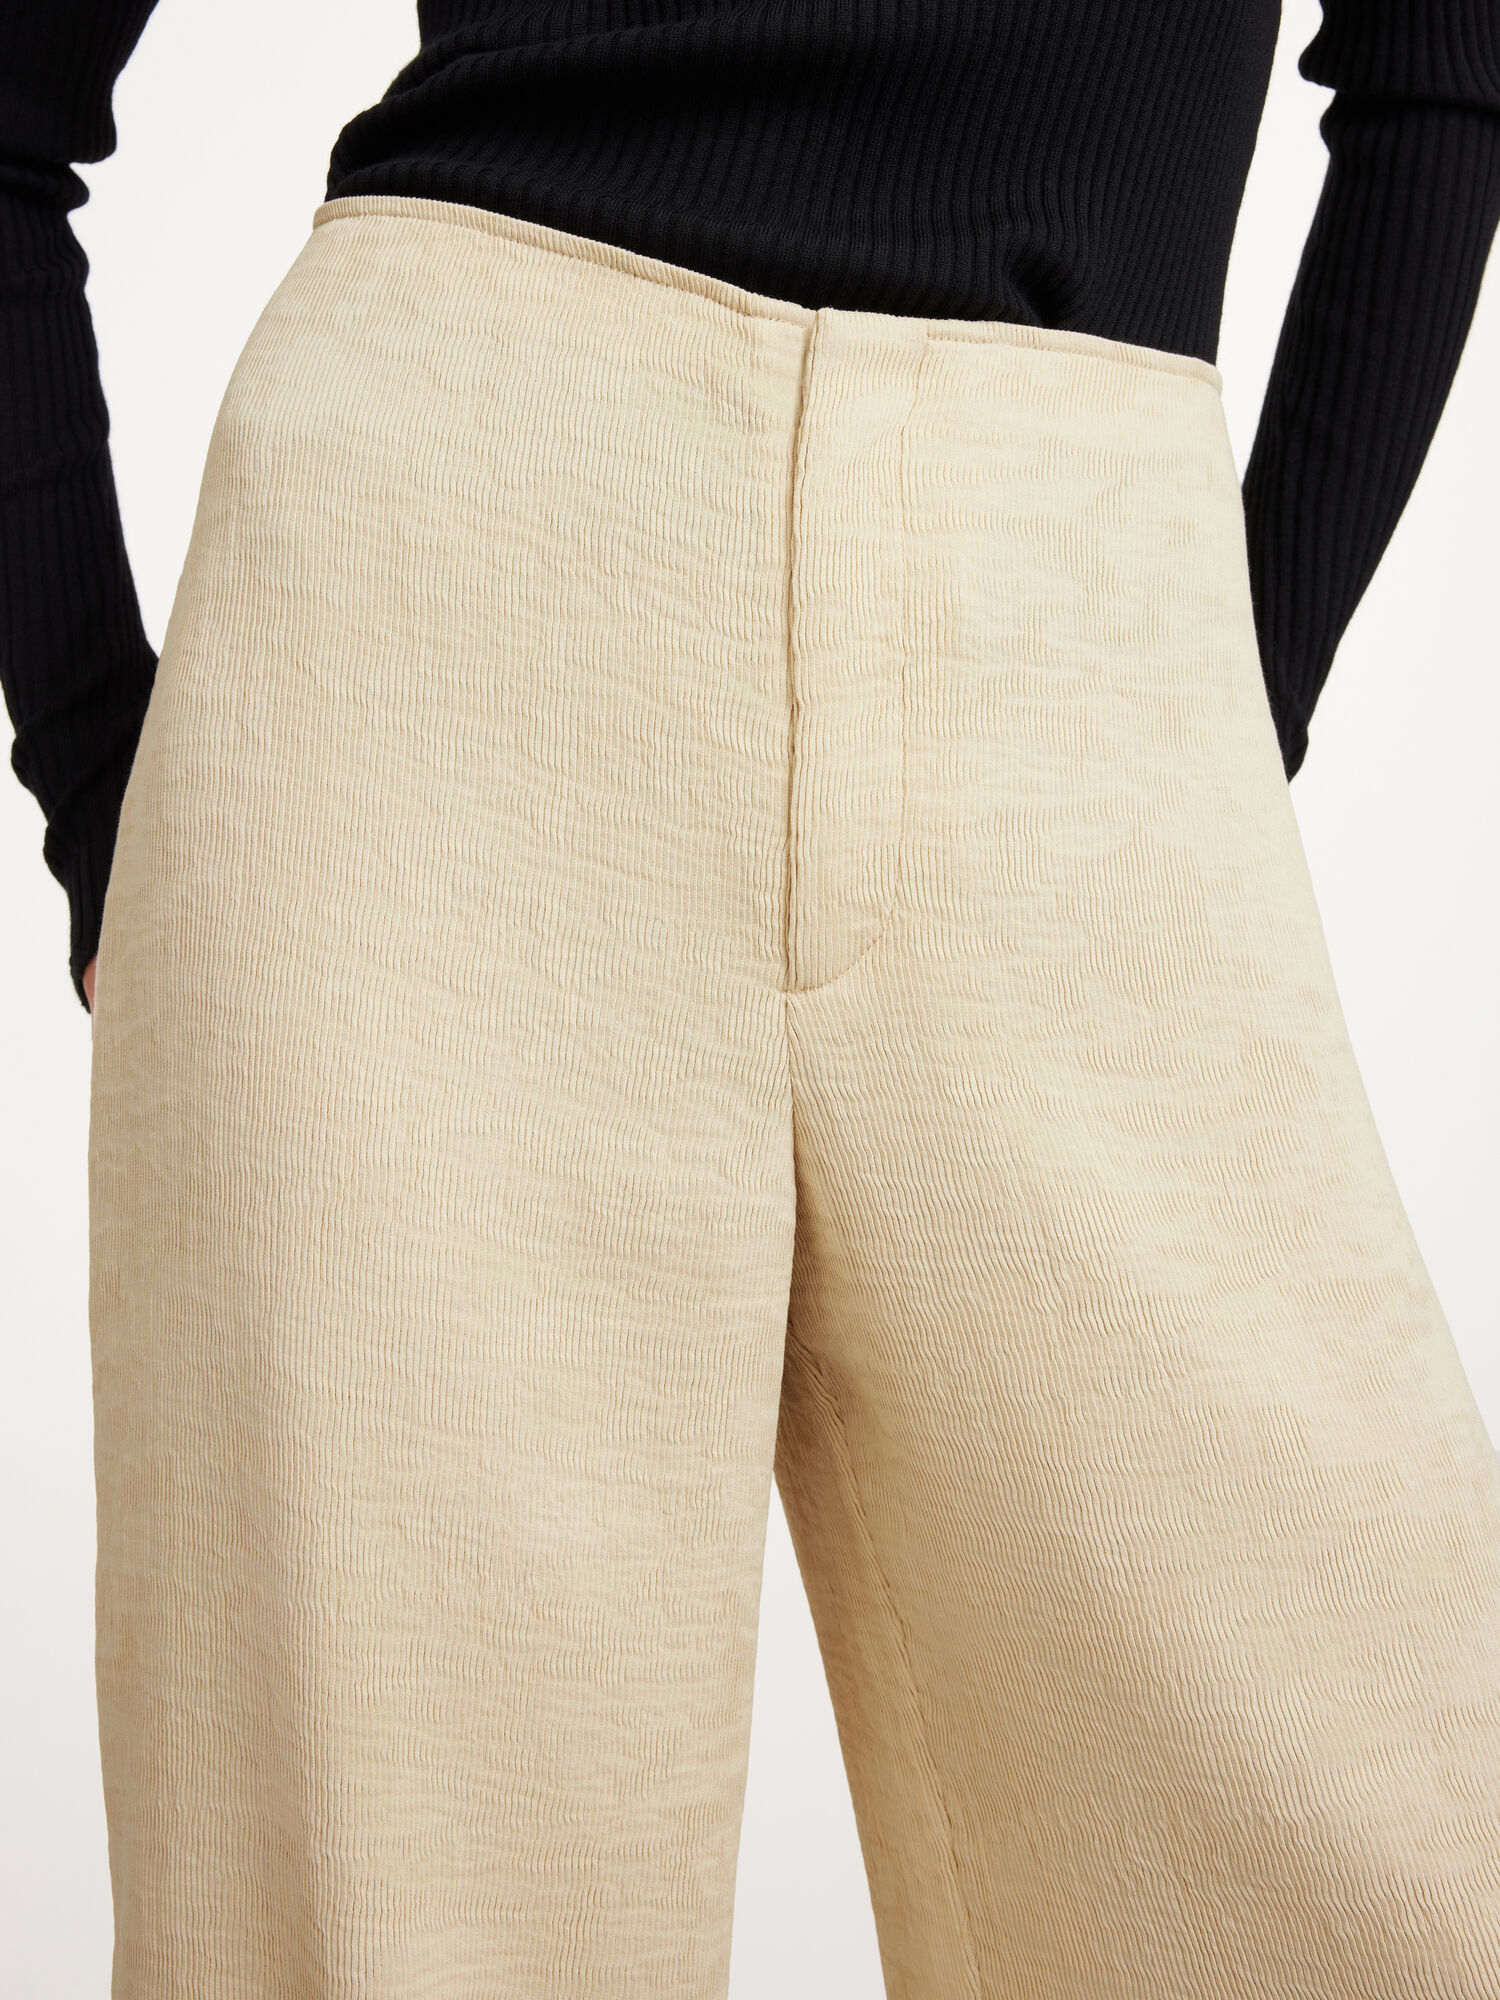 Marchei high-waist trousers